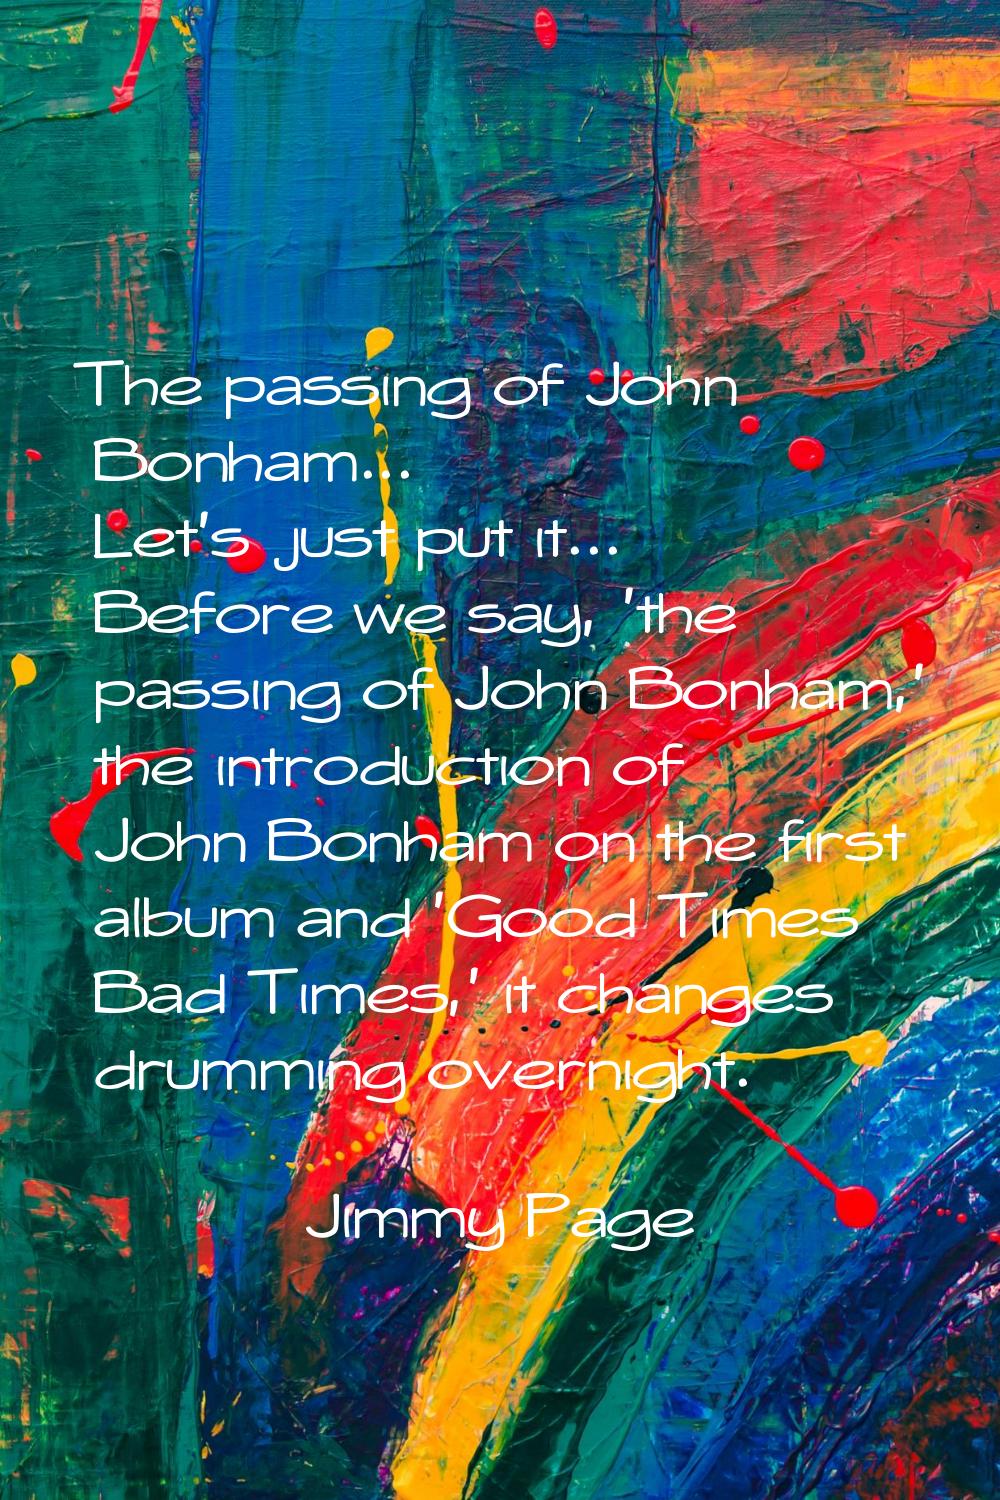 The passing of John Bonham... Let's just put it... Before we say, 'the passing of John Bonham,' the